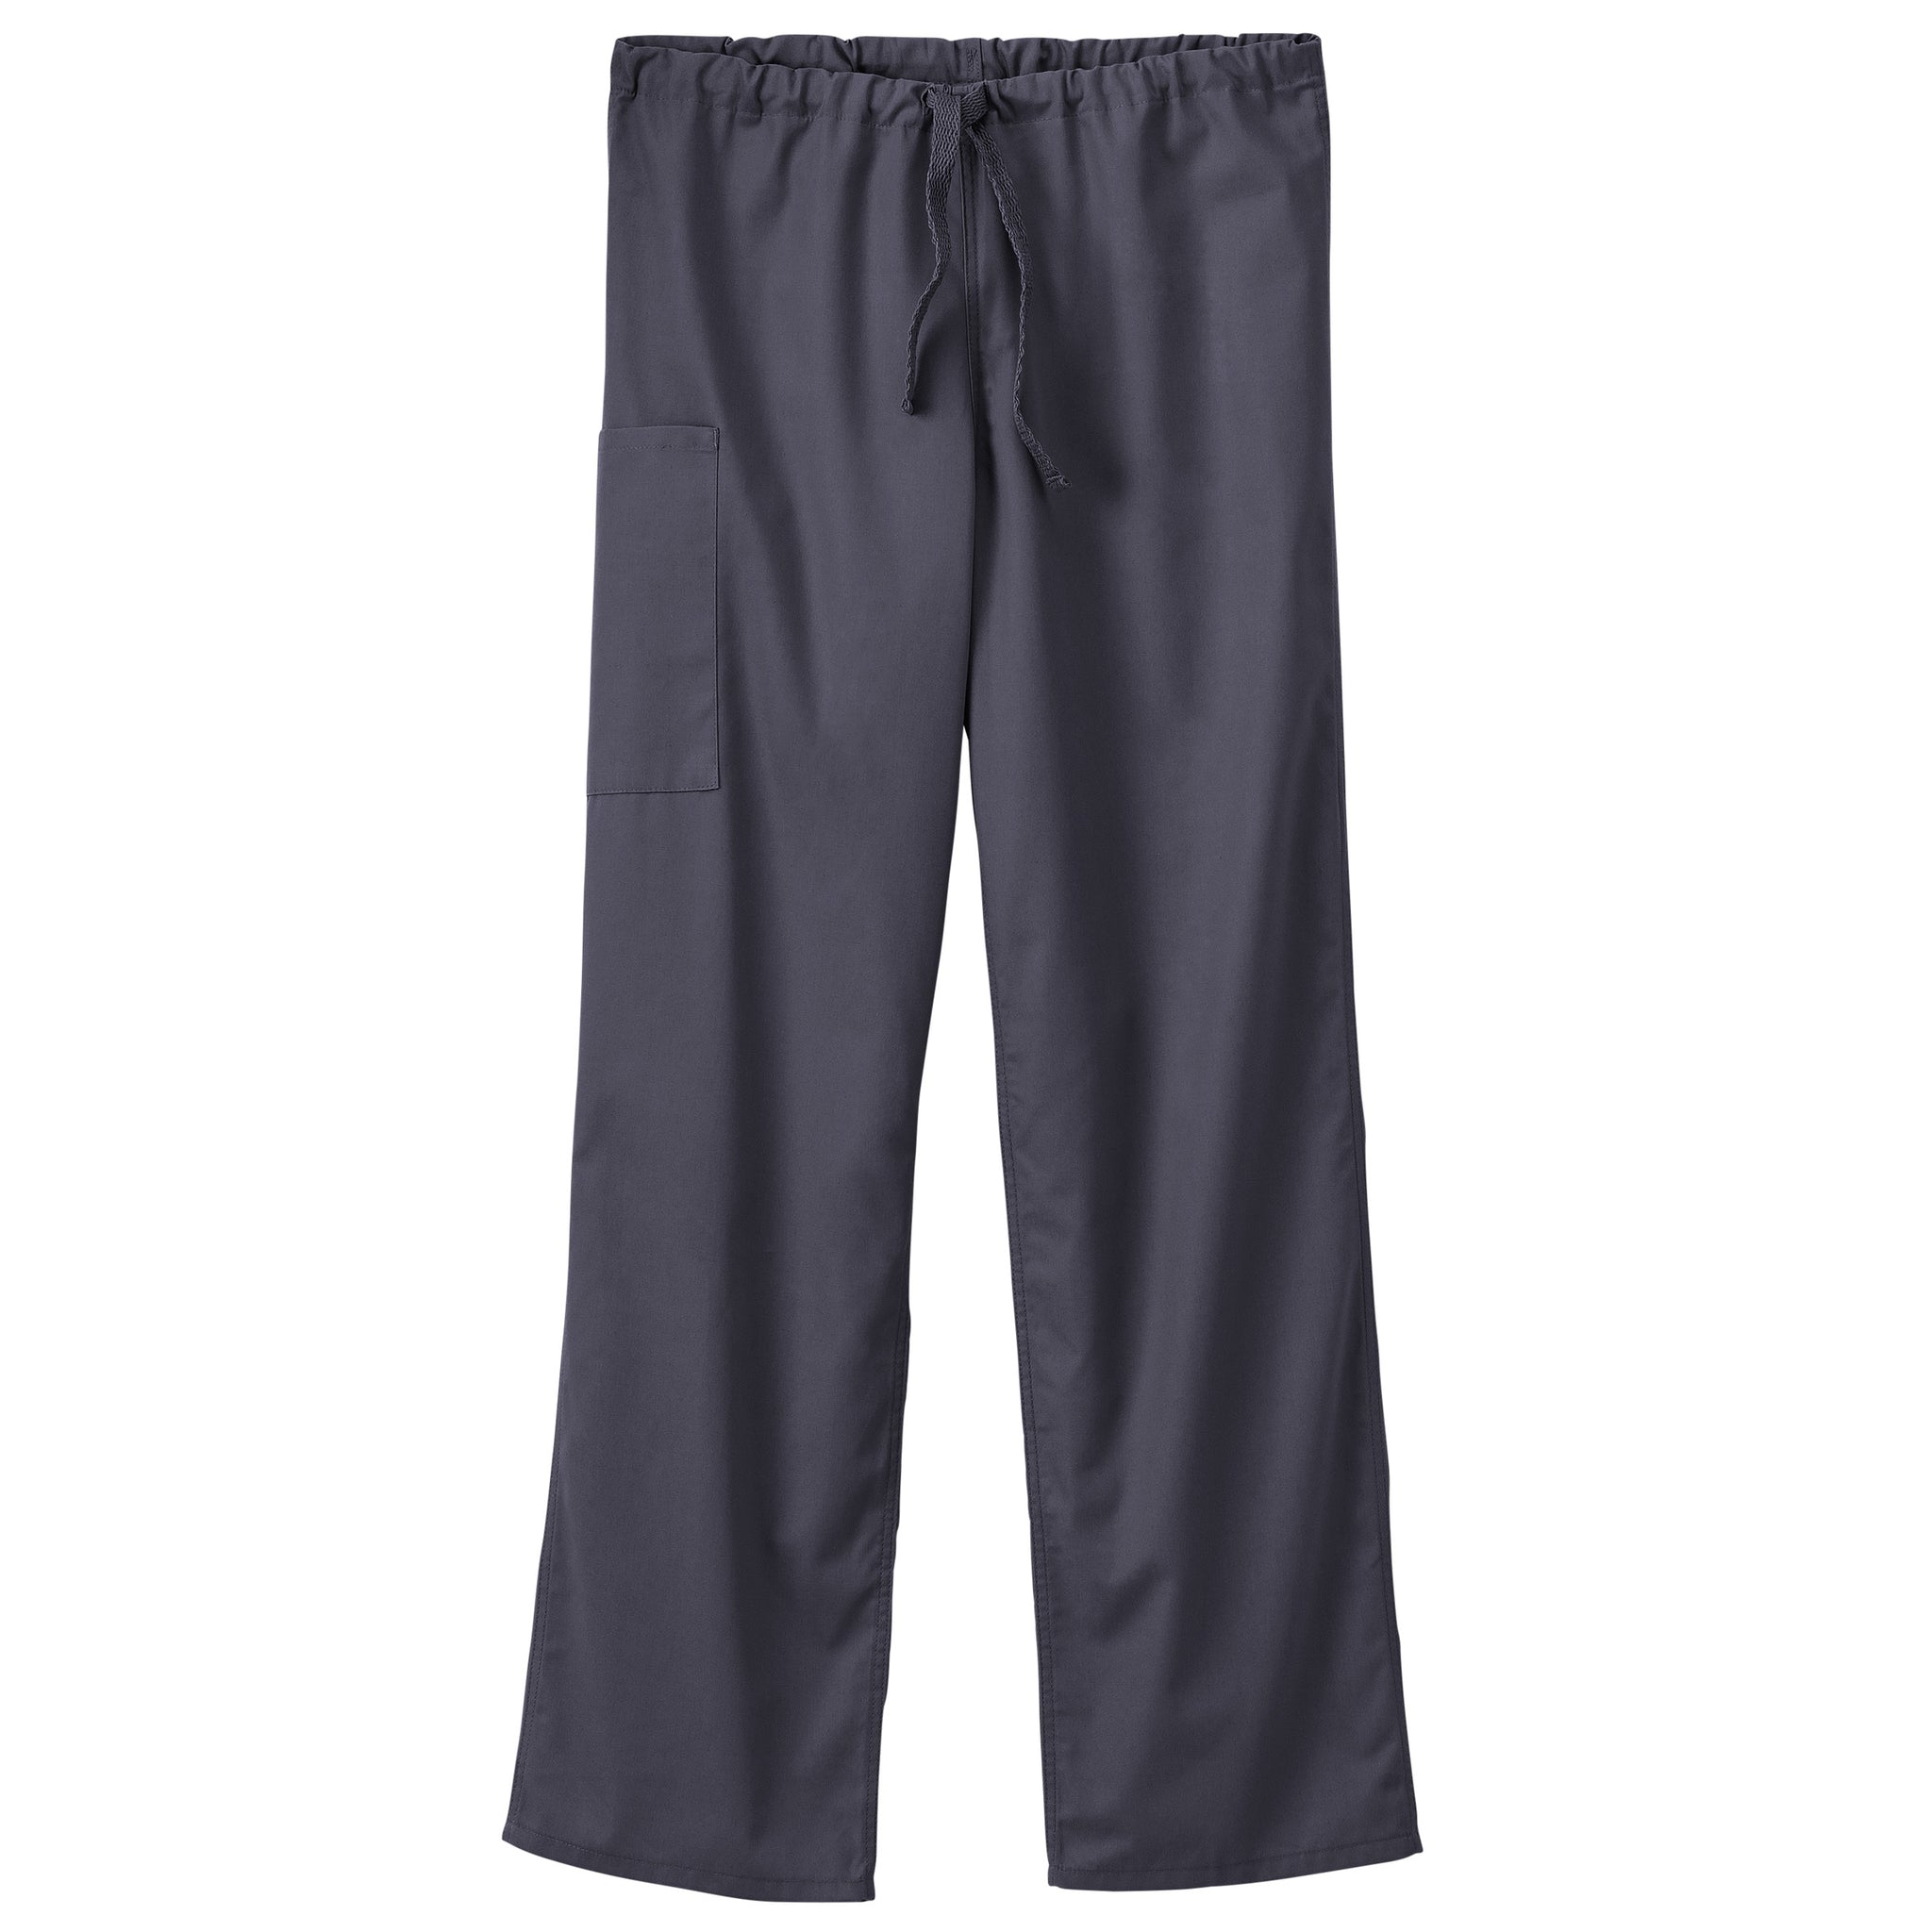 Drawstring & Elastic Waist Pants, Unisex Scrub Pants